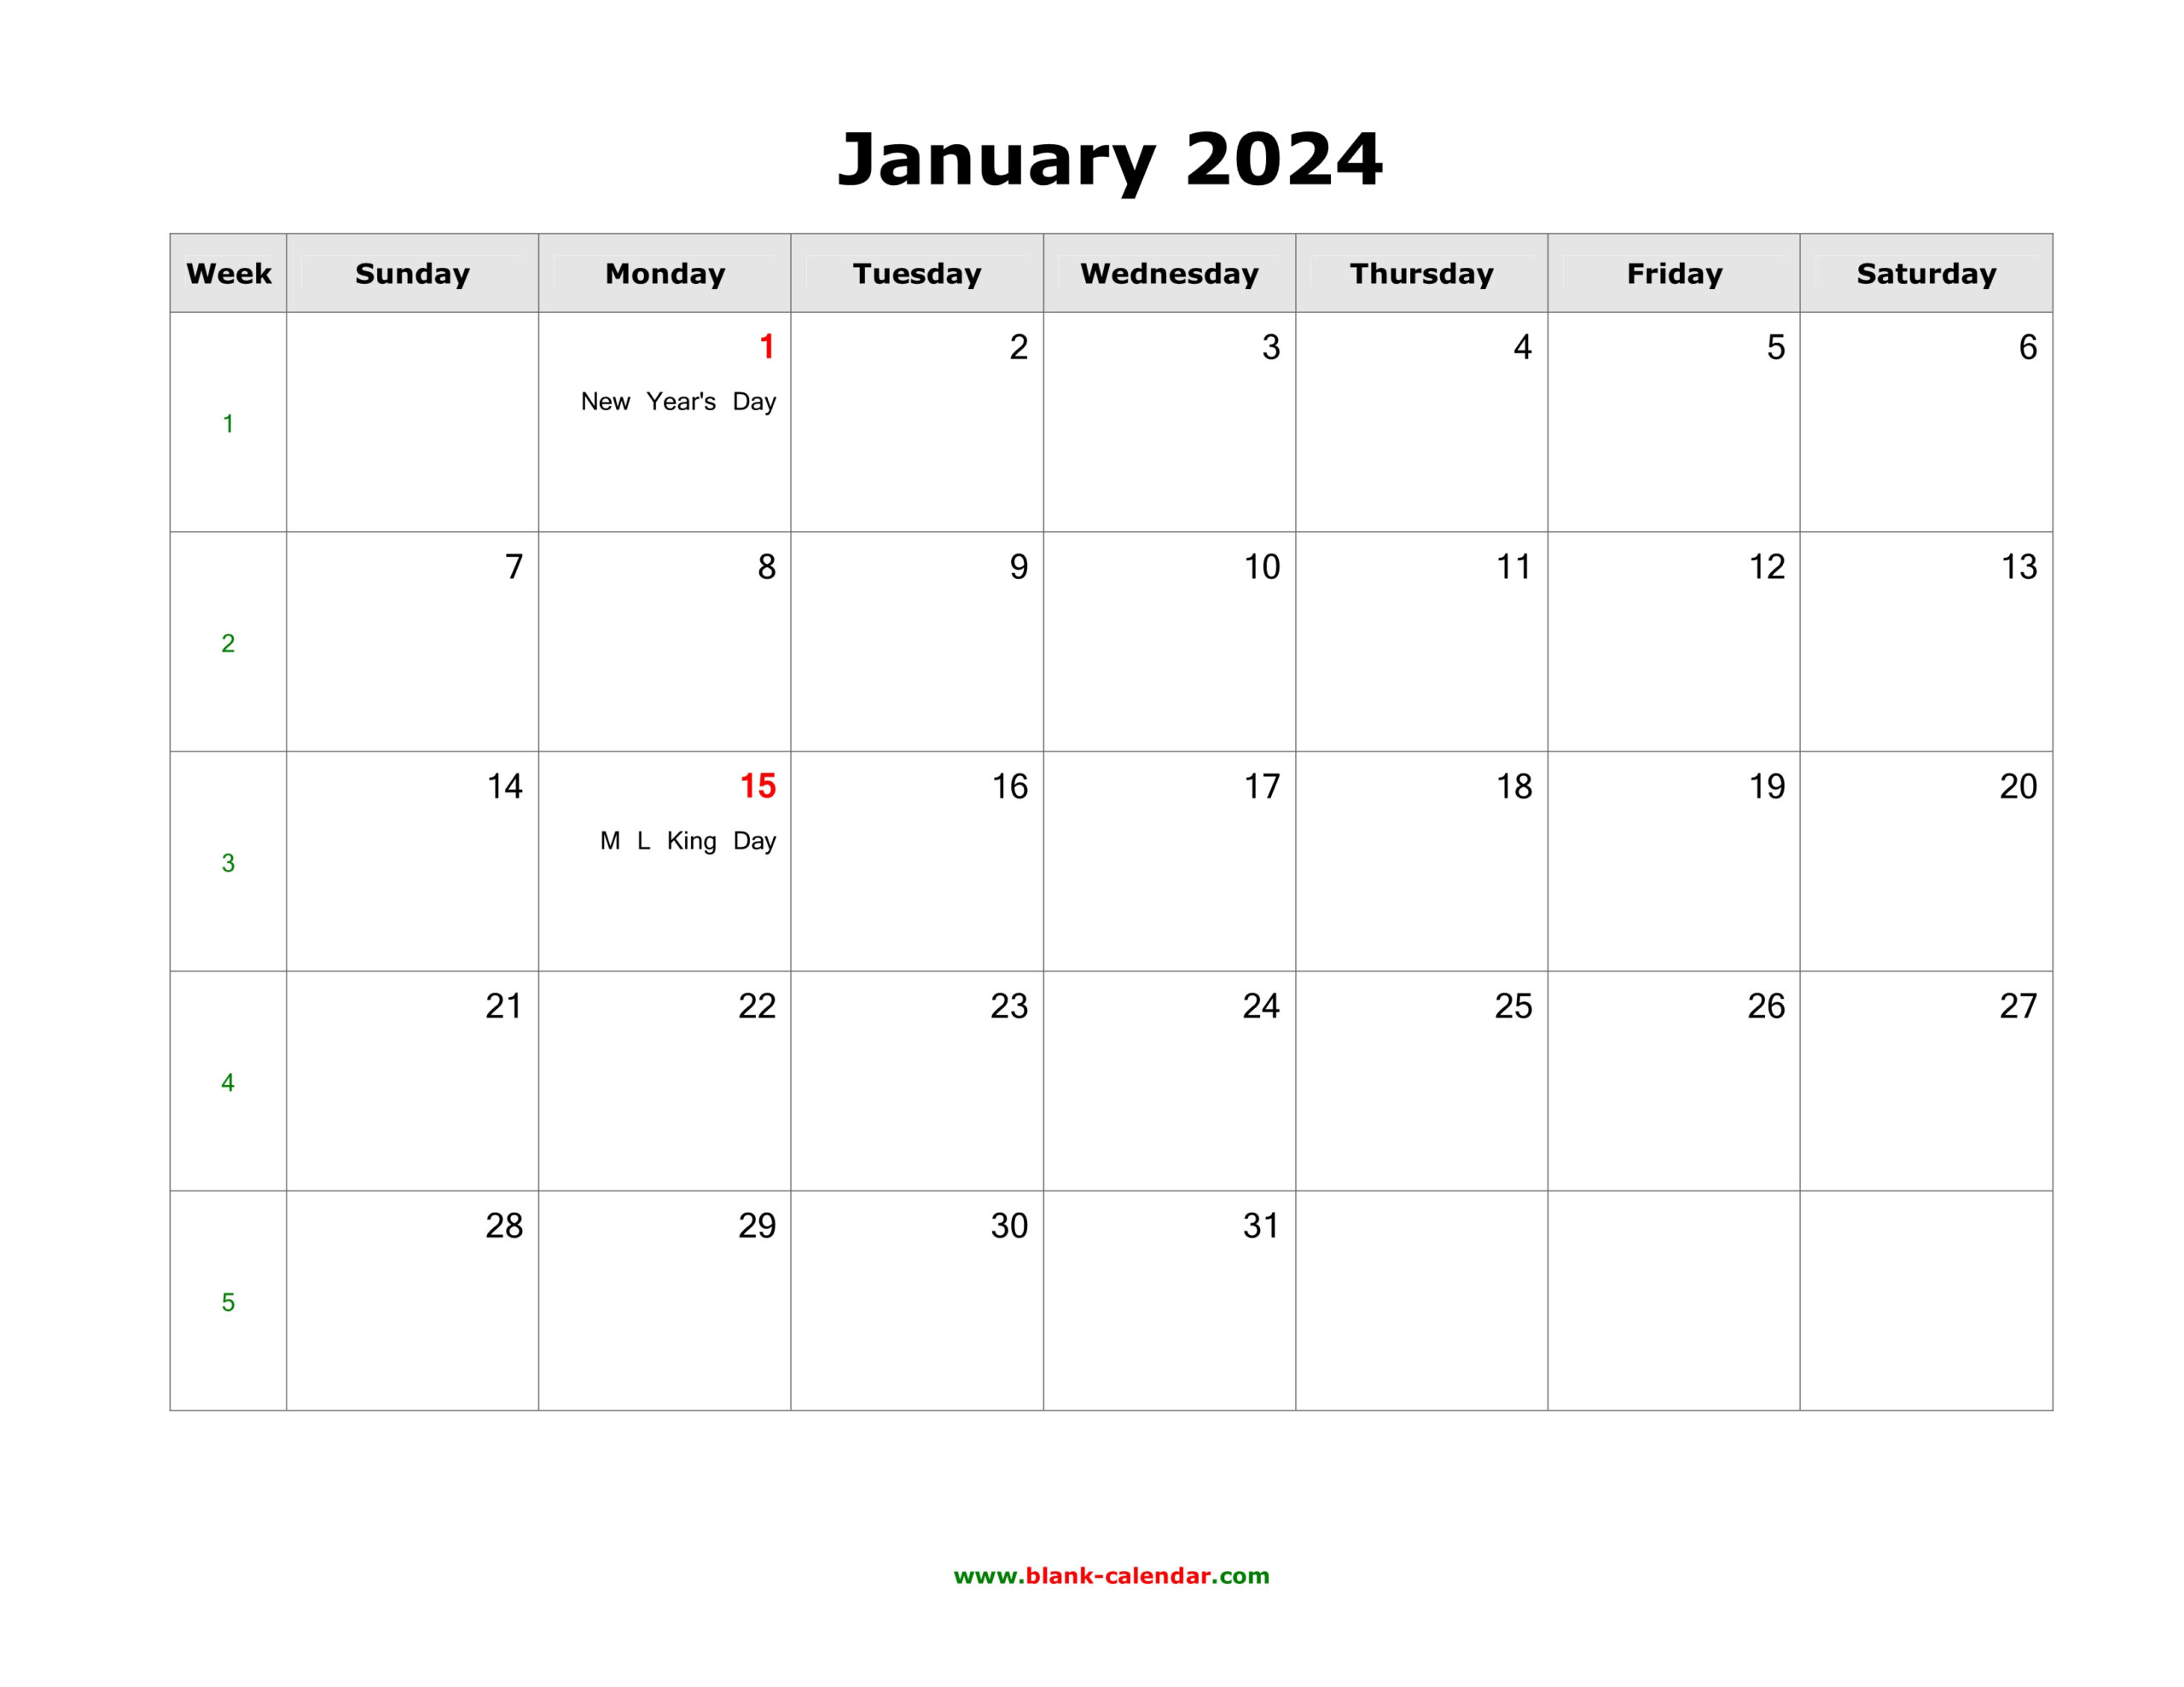 January 2024 Blank Calendar | Free Download Calendar Templates for Blank 2024 Calendar Printable With Holidays